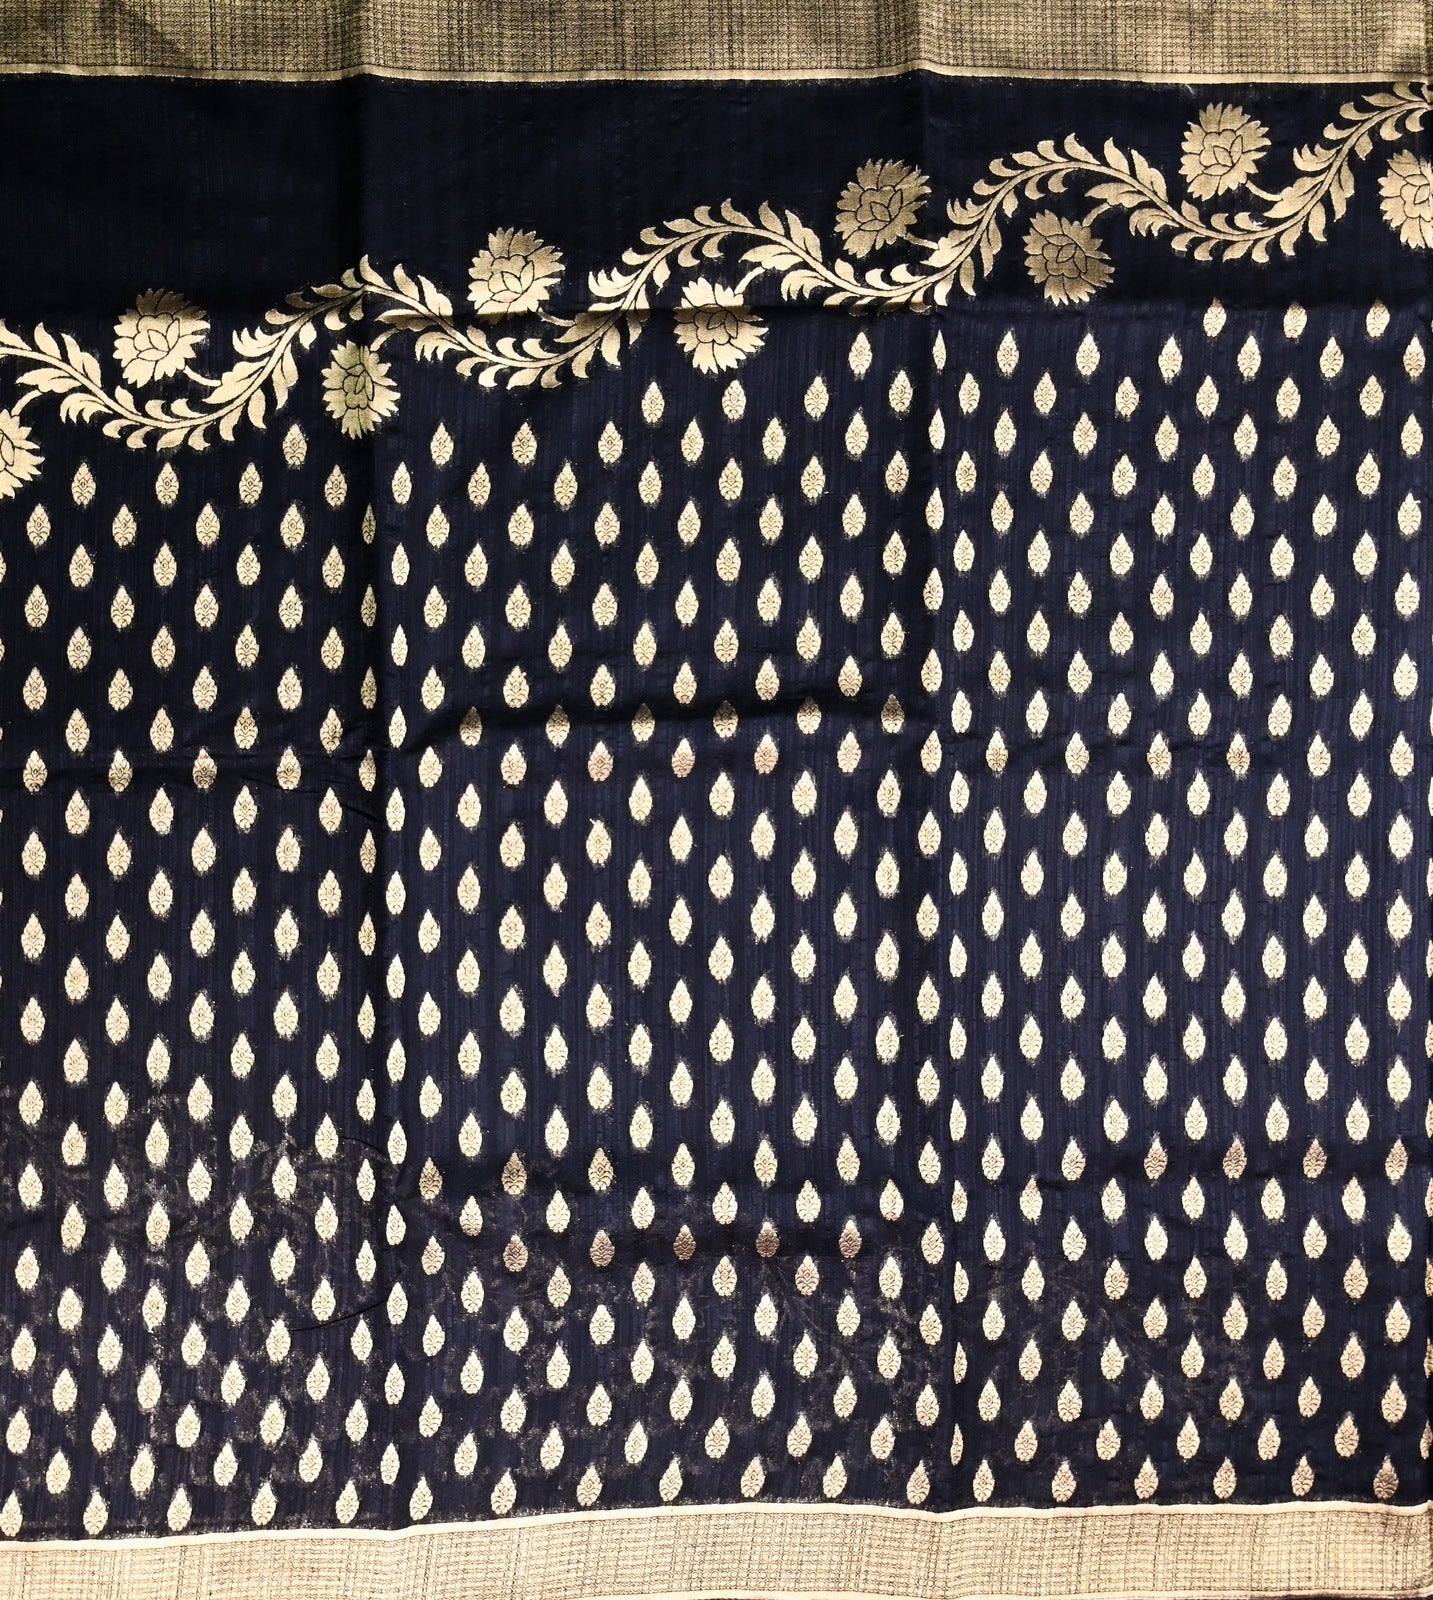 Dupion fancy saree black color with allover gold zari motive weaves, short pallu, zari border with plain blouse